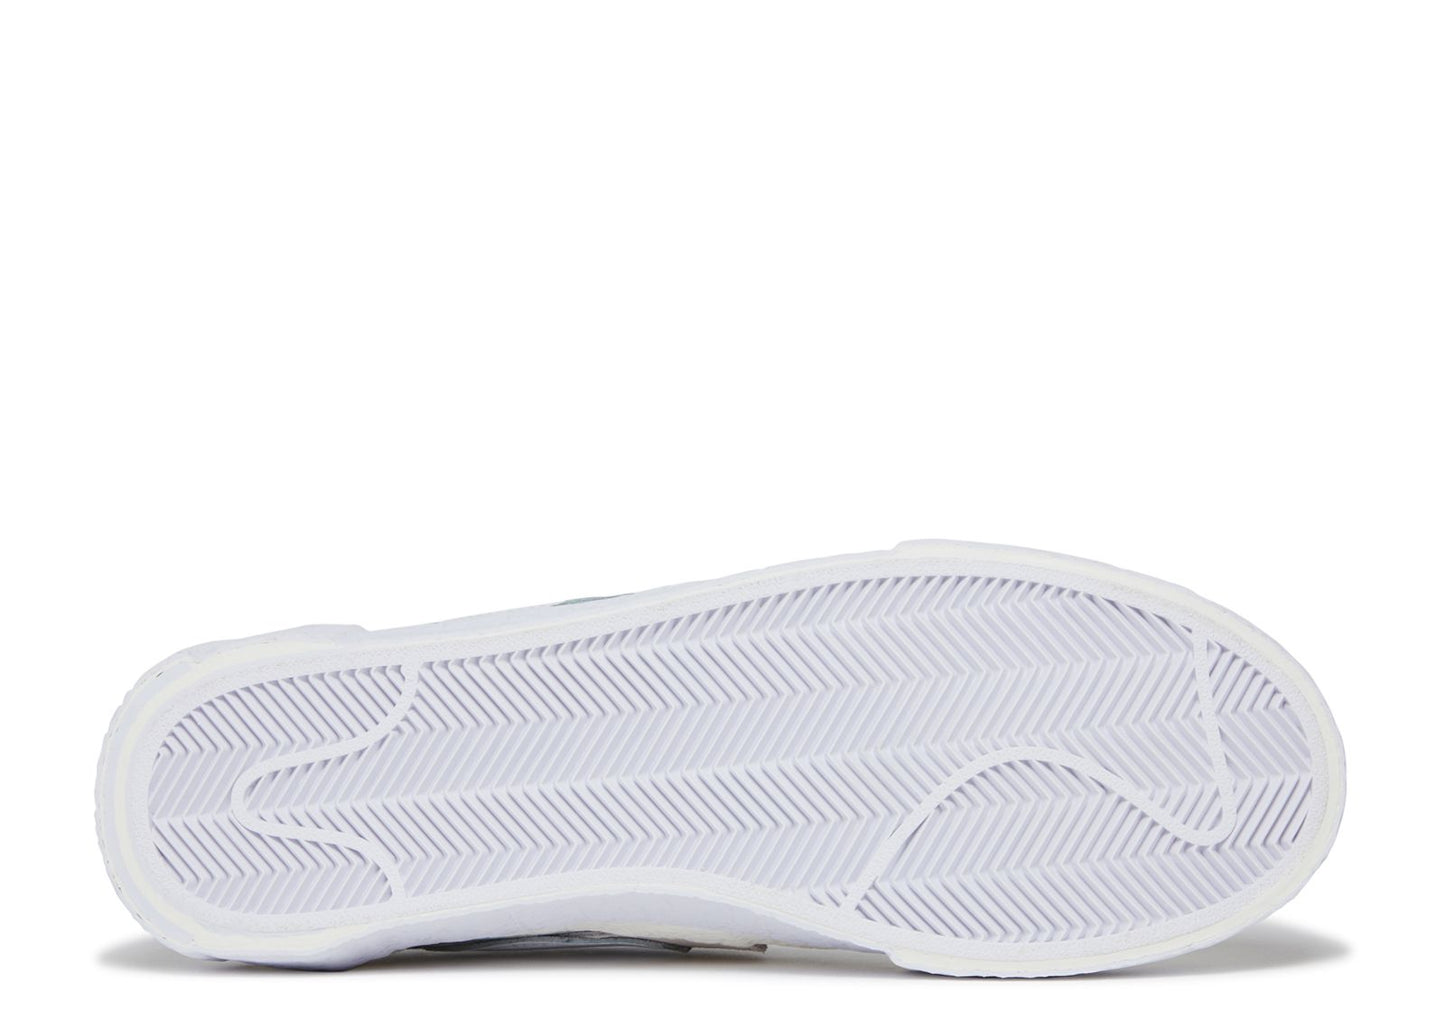 Nike Blazer Low sacai White Patent Leather